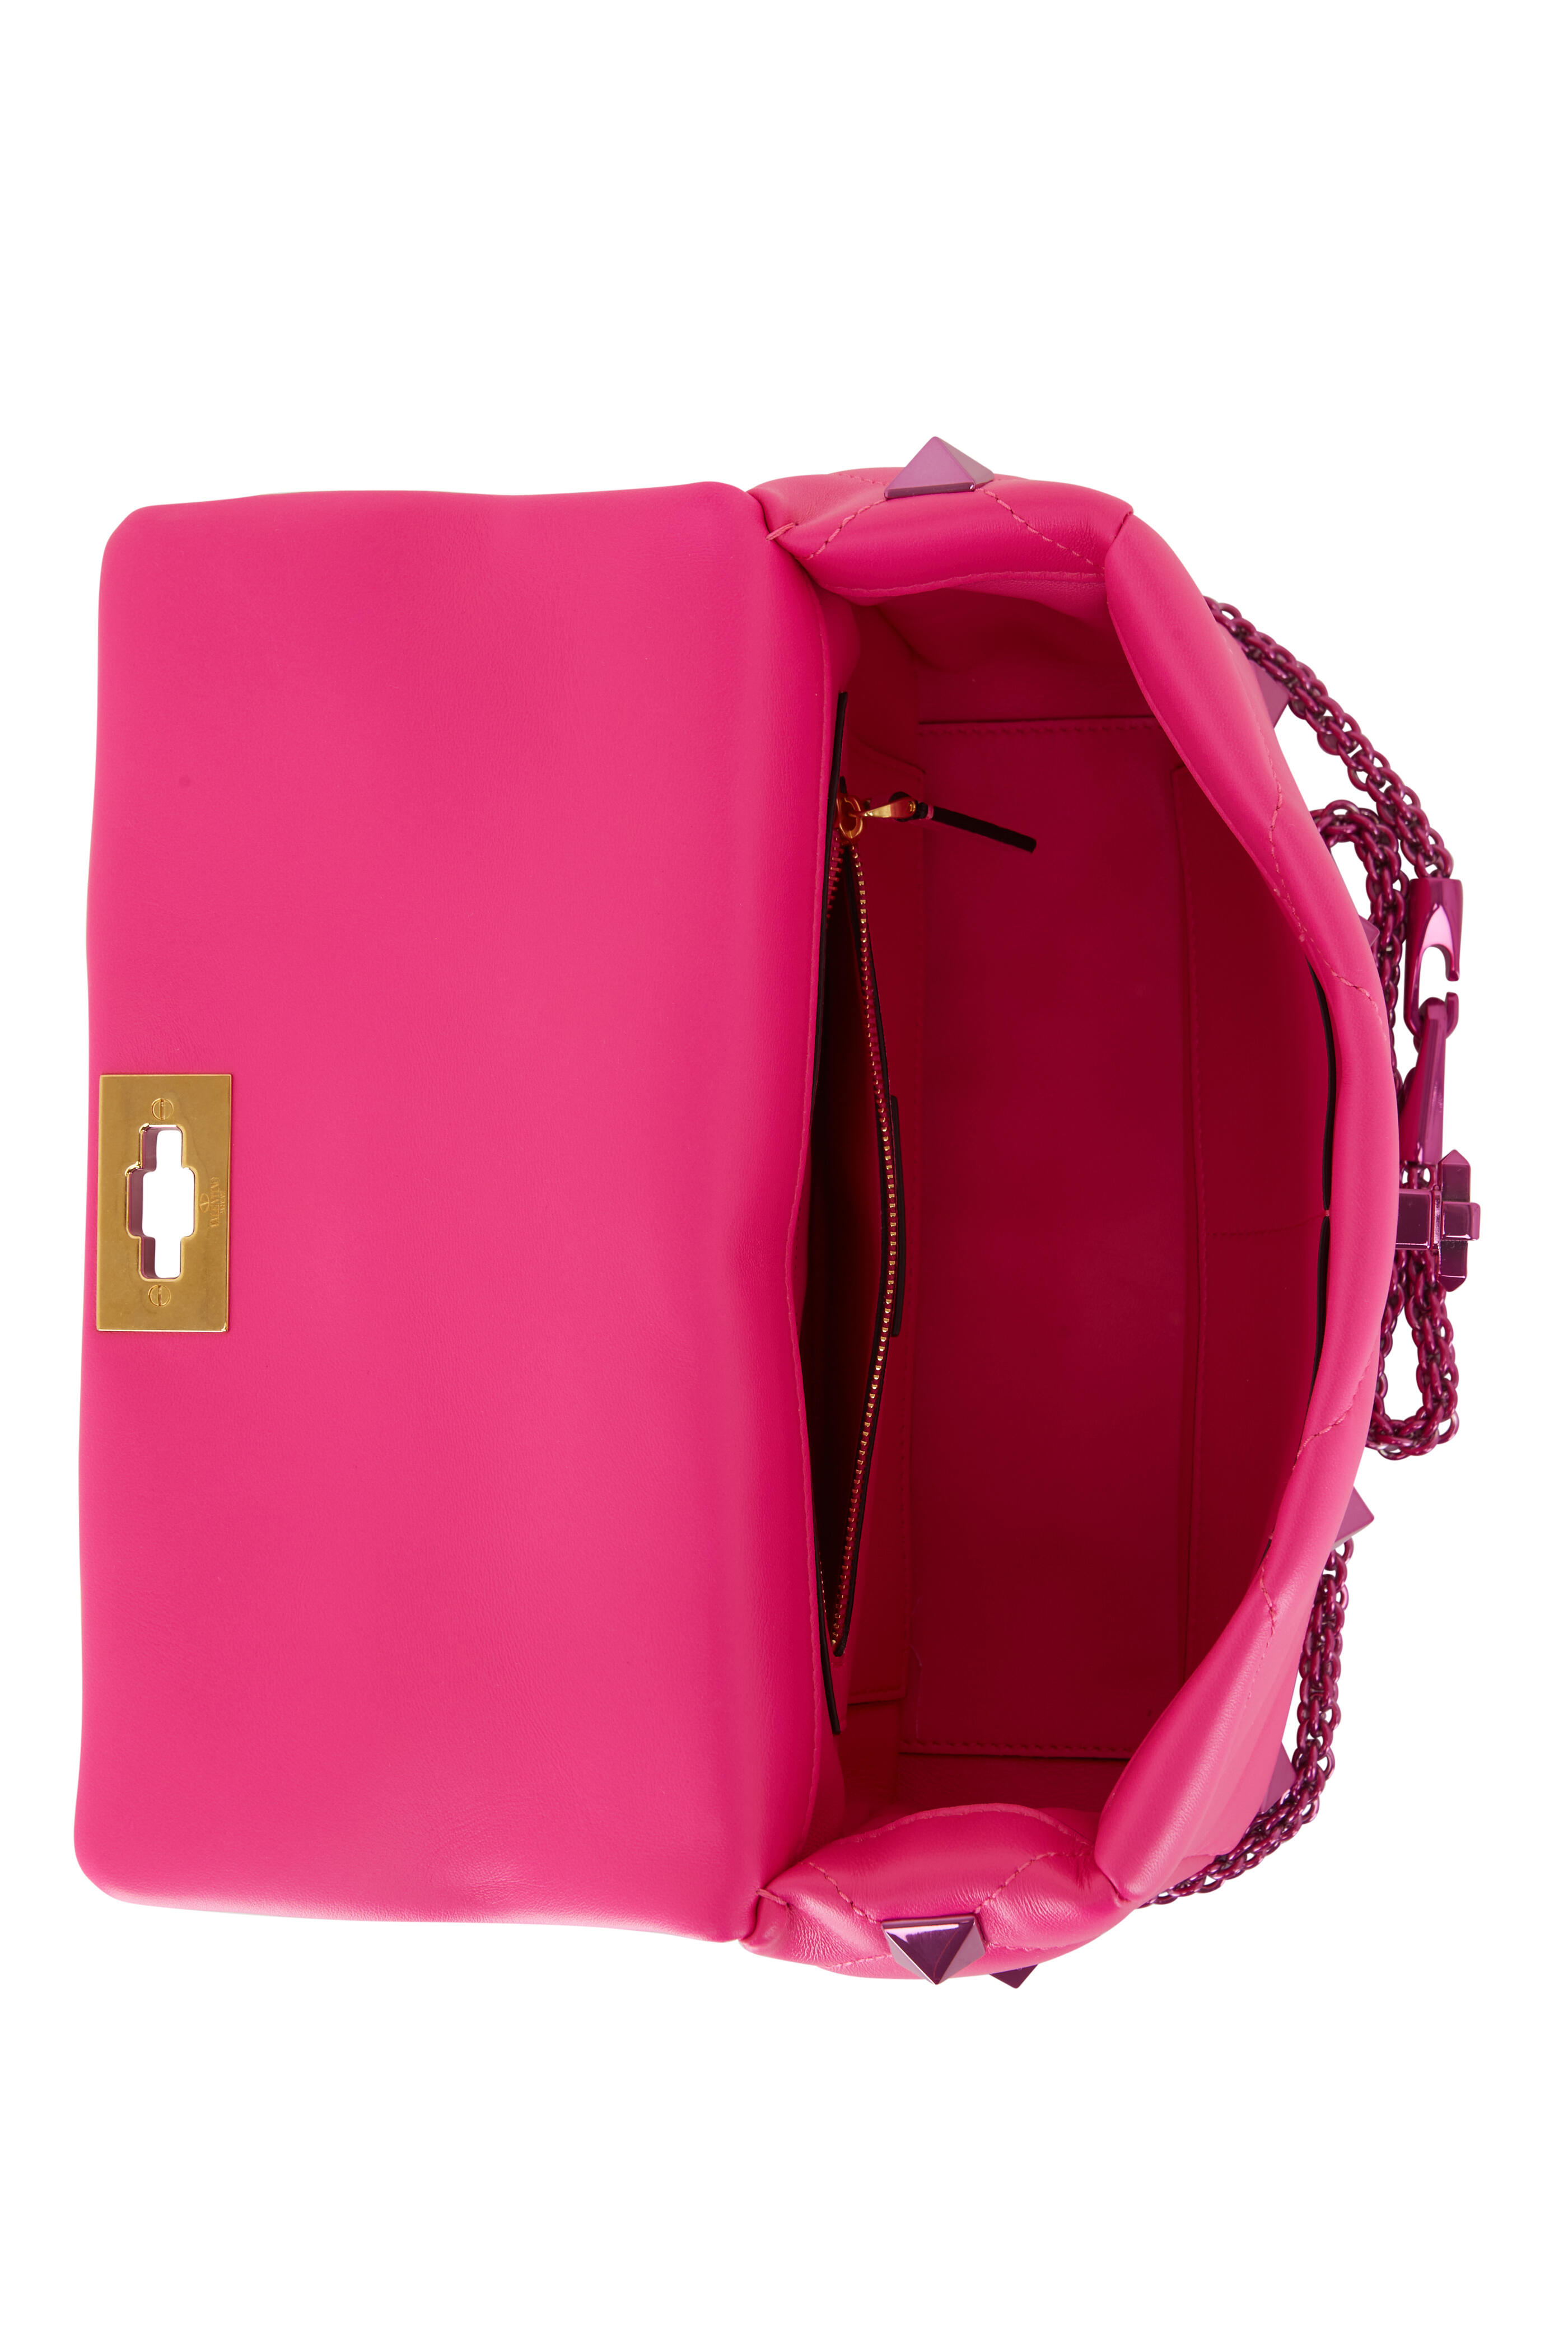 Valentino, Bags, Valentino Large Roman Stud Nappa Pink Shoulder Bag